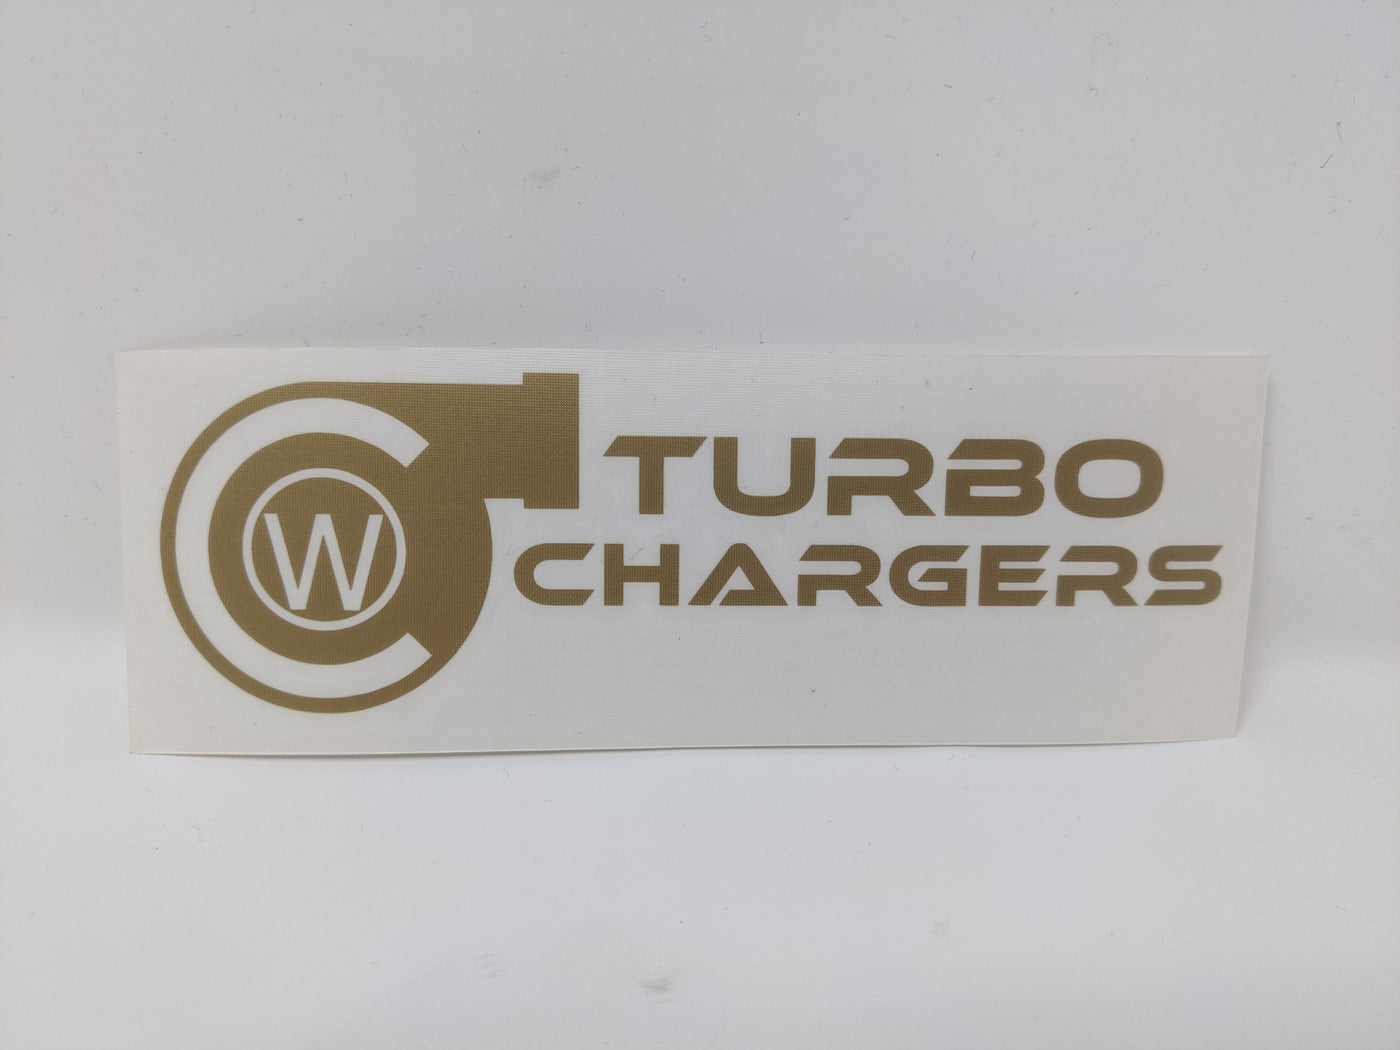 CW Turbochargers 6x2" vinyl sticker/decal